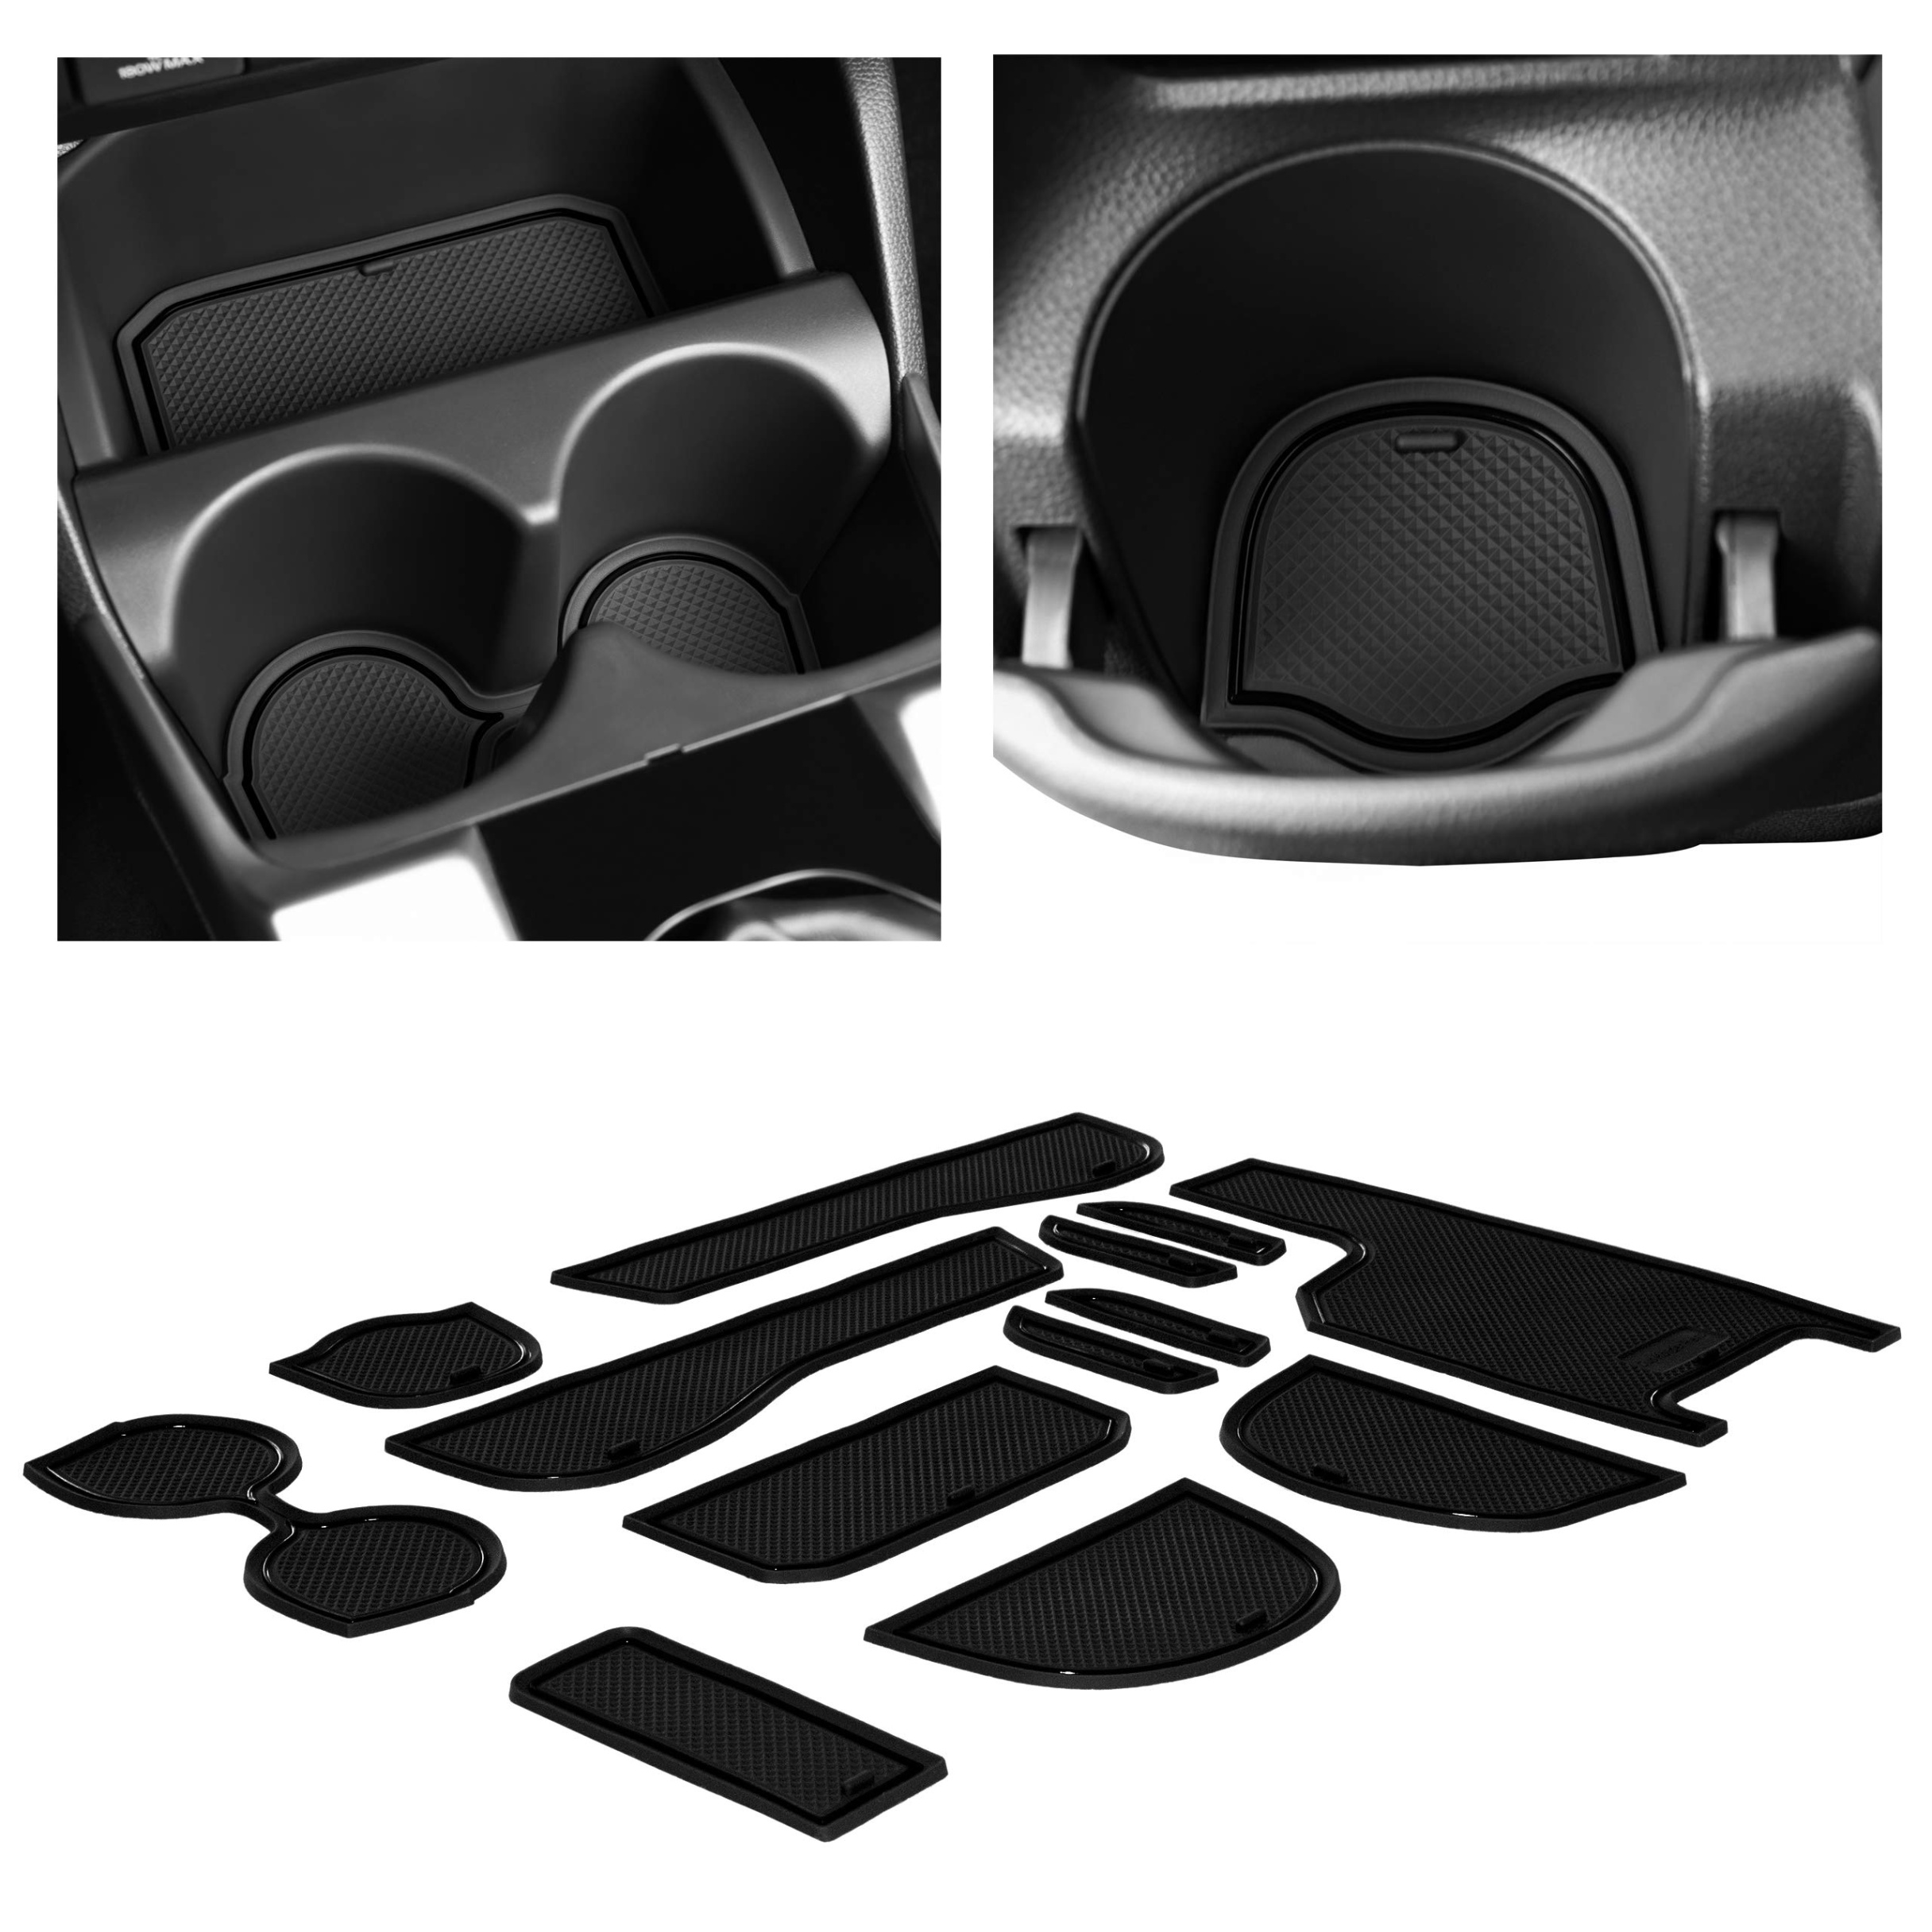 accessories for honda fit Bulan 2 CupHolderHero fits Honda Fit Accessories - Premium Custom Interior  Non-Slip Anti Dust Cup Holder Inserts, Center Console Liner Mats, Door